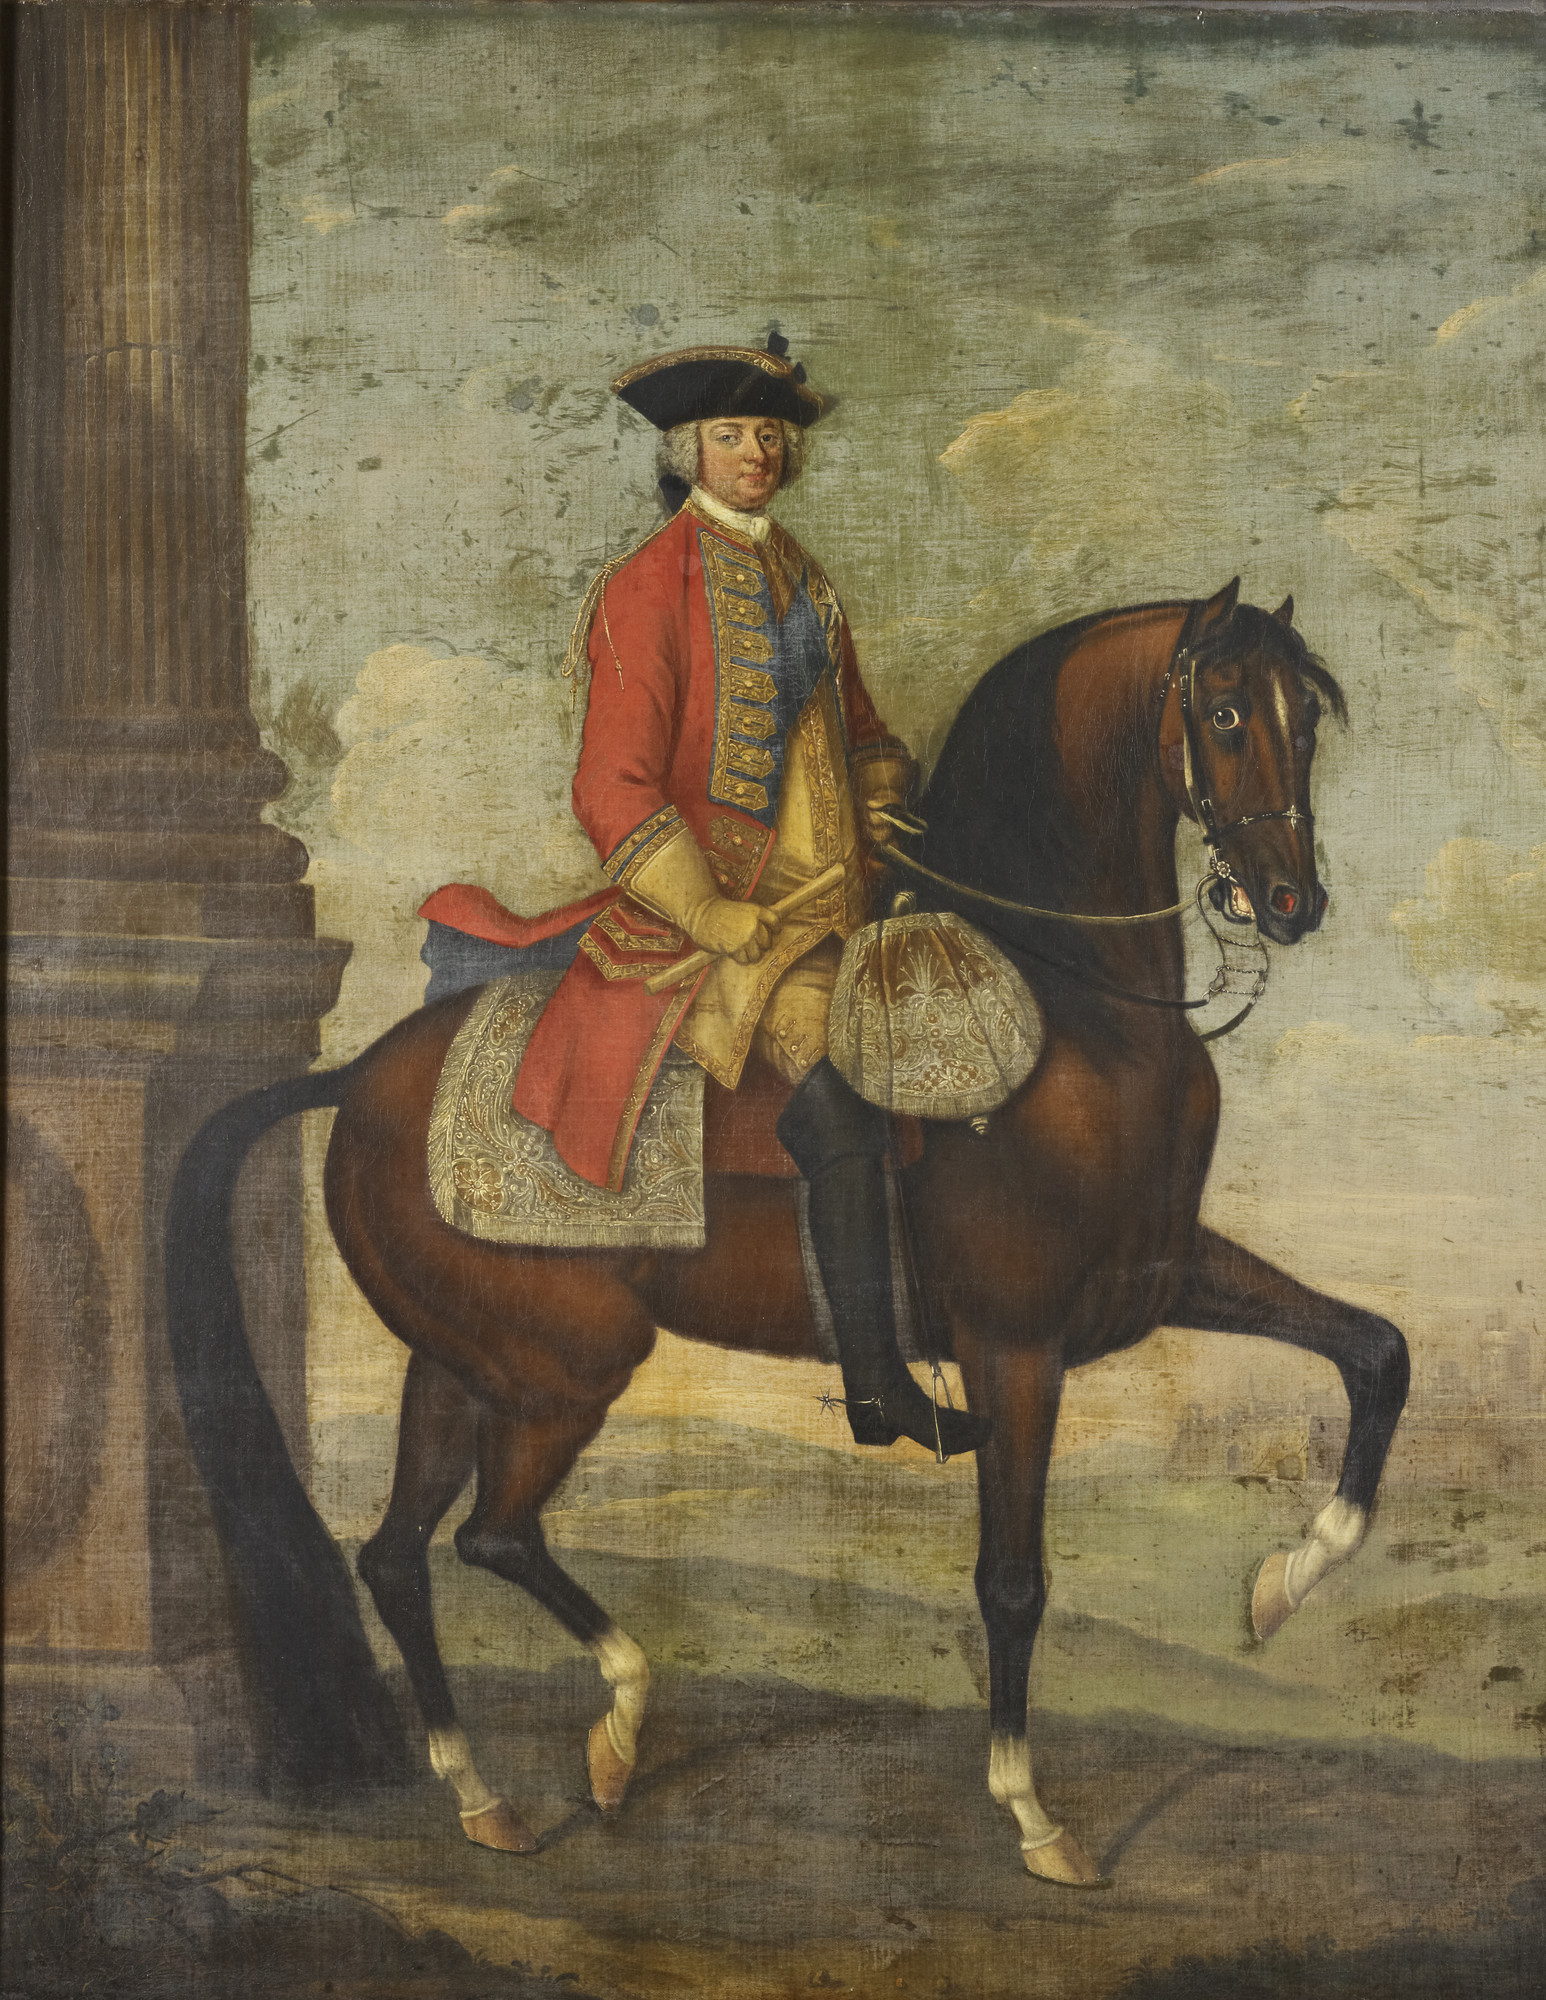 Duke of Cumberland, David Morier, après 1743, royal collection trust